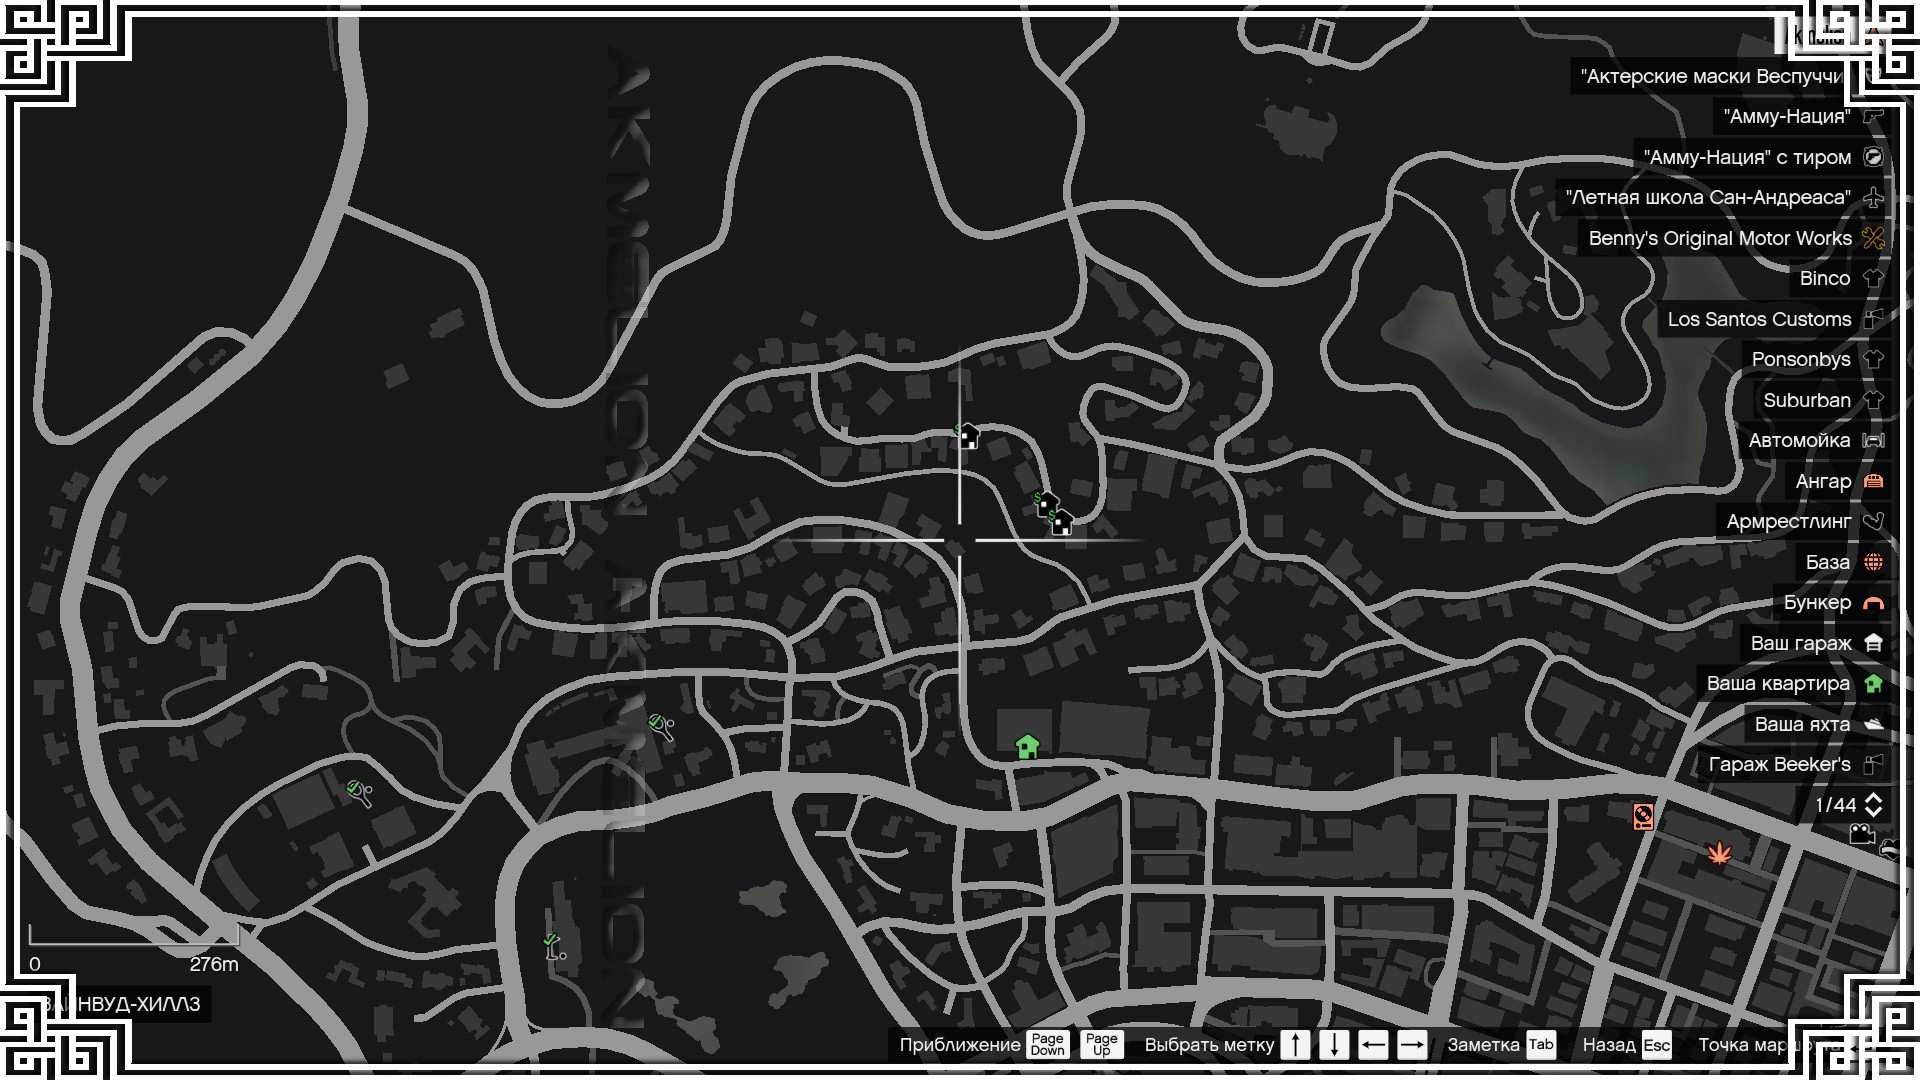 GTA 5 Peyote Plant Locations Map